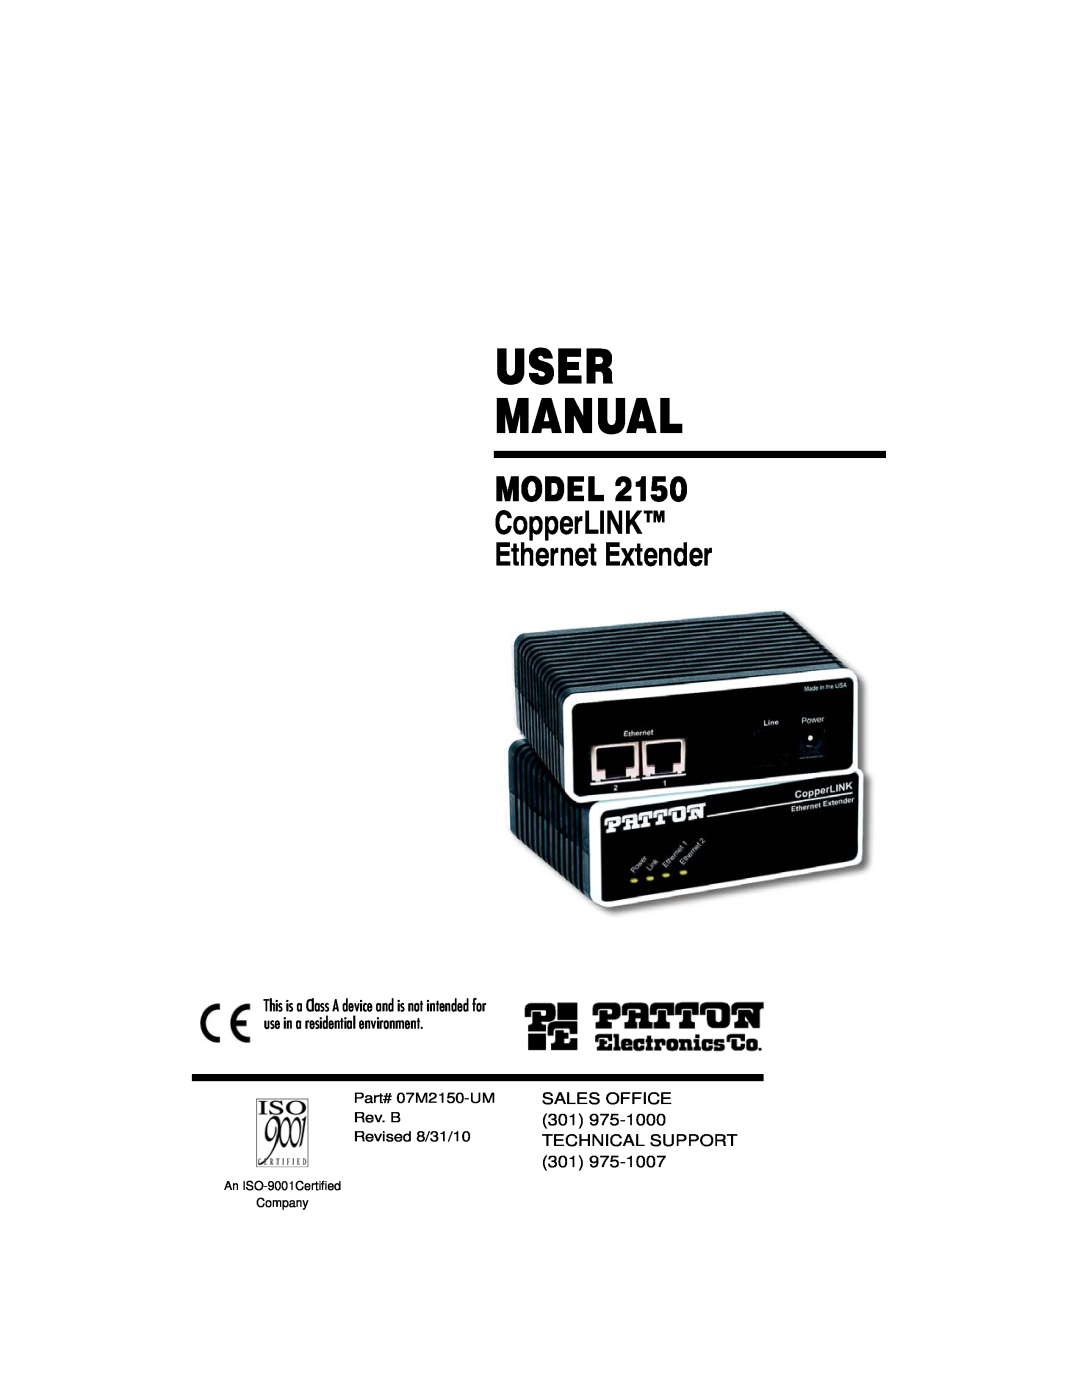 Patton electronic user manual User Manual, Model, CopperLINK Ethernet Extender, Part# 07M2150-UM, Rev. B 